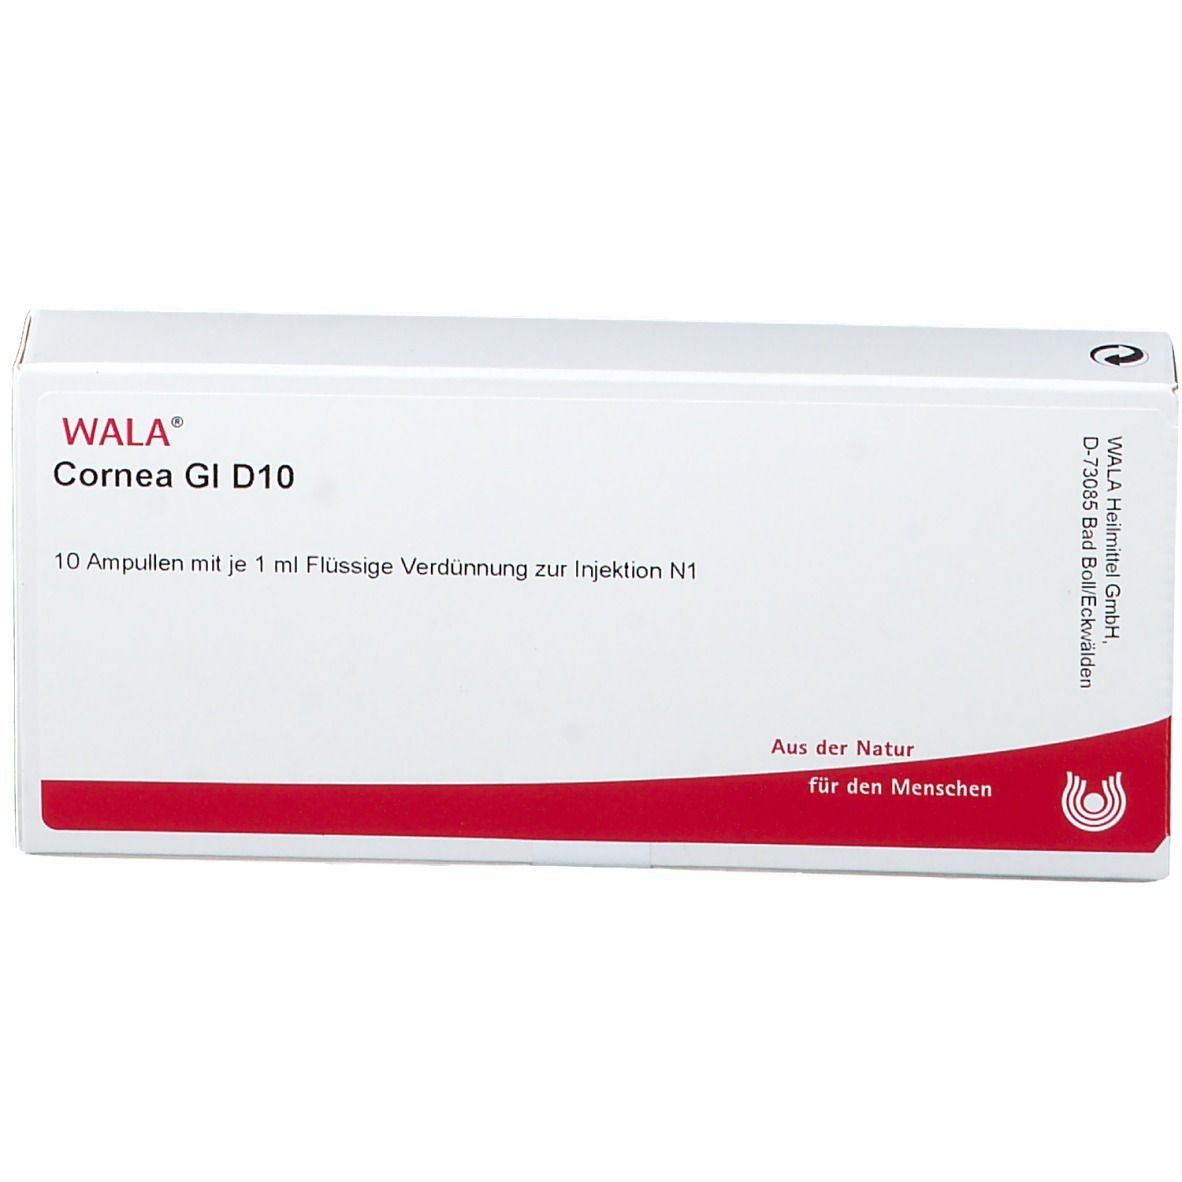 WALA® Cornea Gl D 10